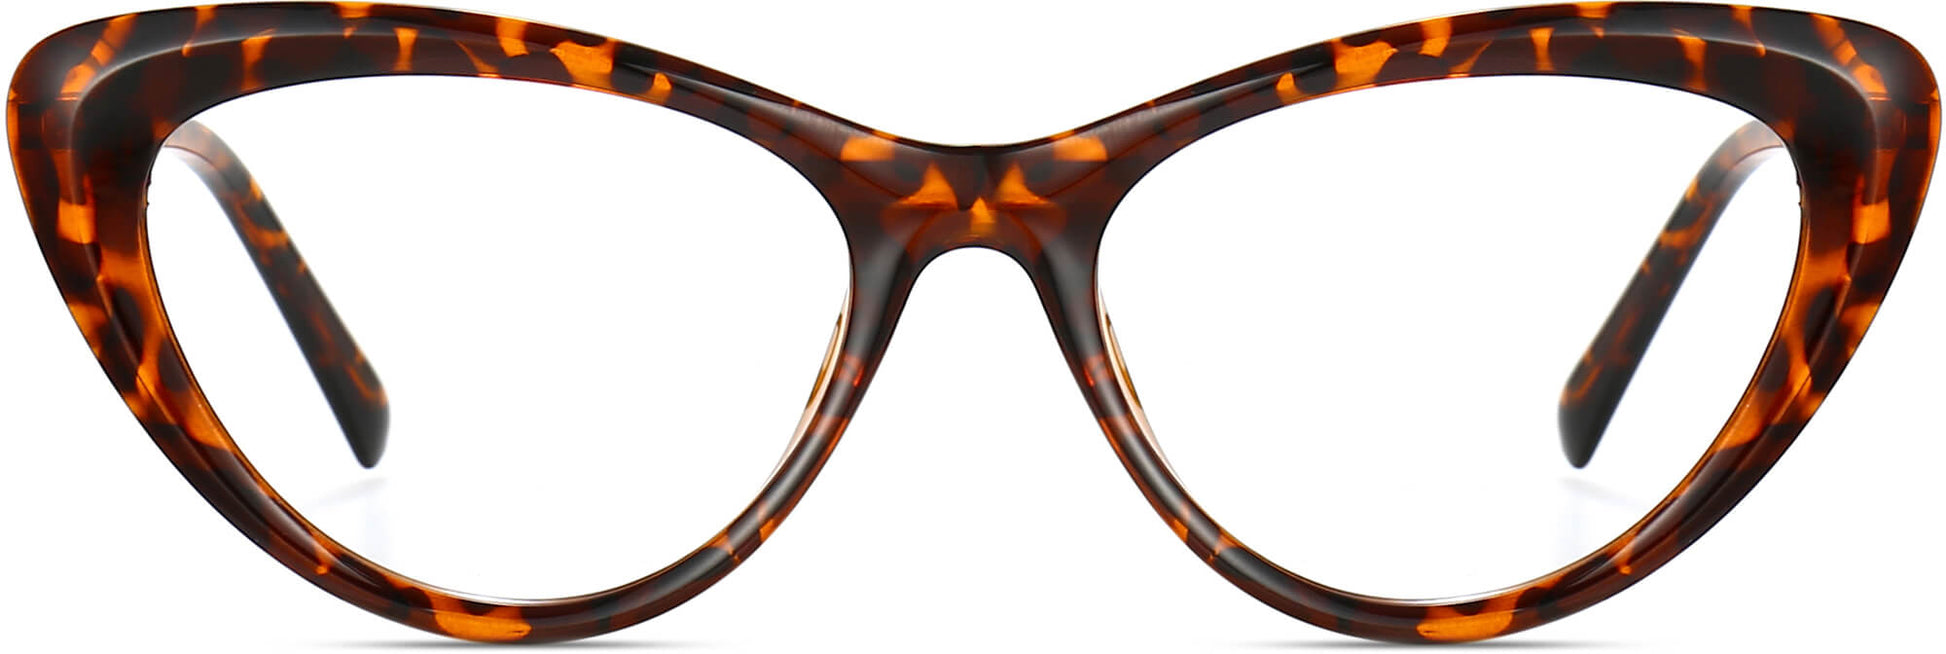 Everett Cateye Tortoise Eyeglasses from ANRRI, front view